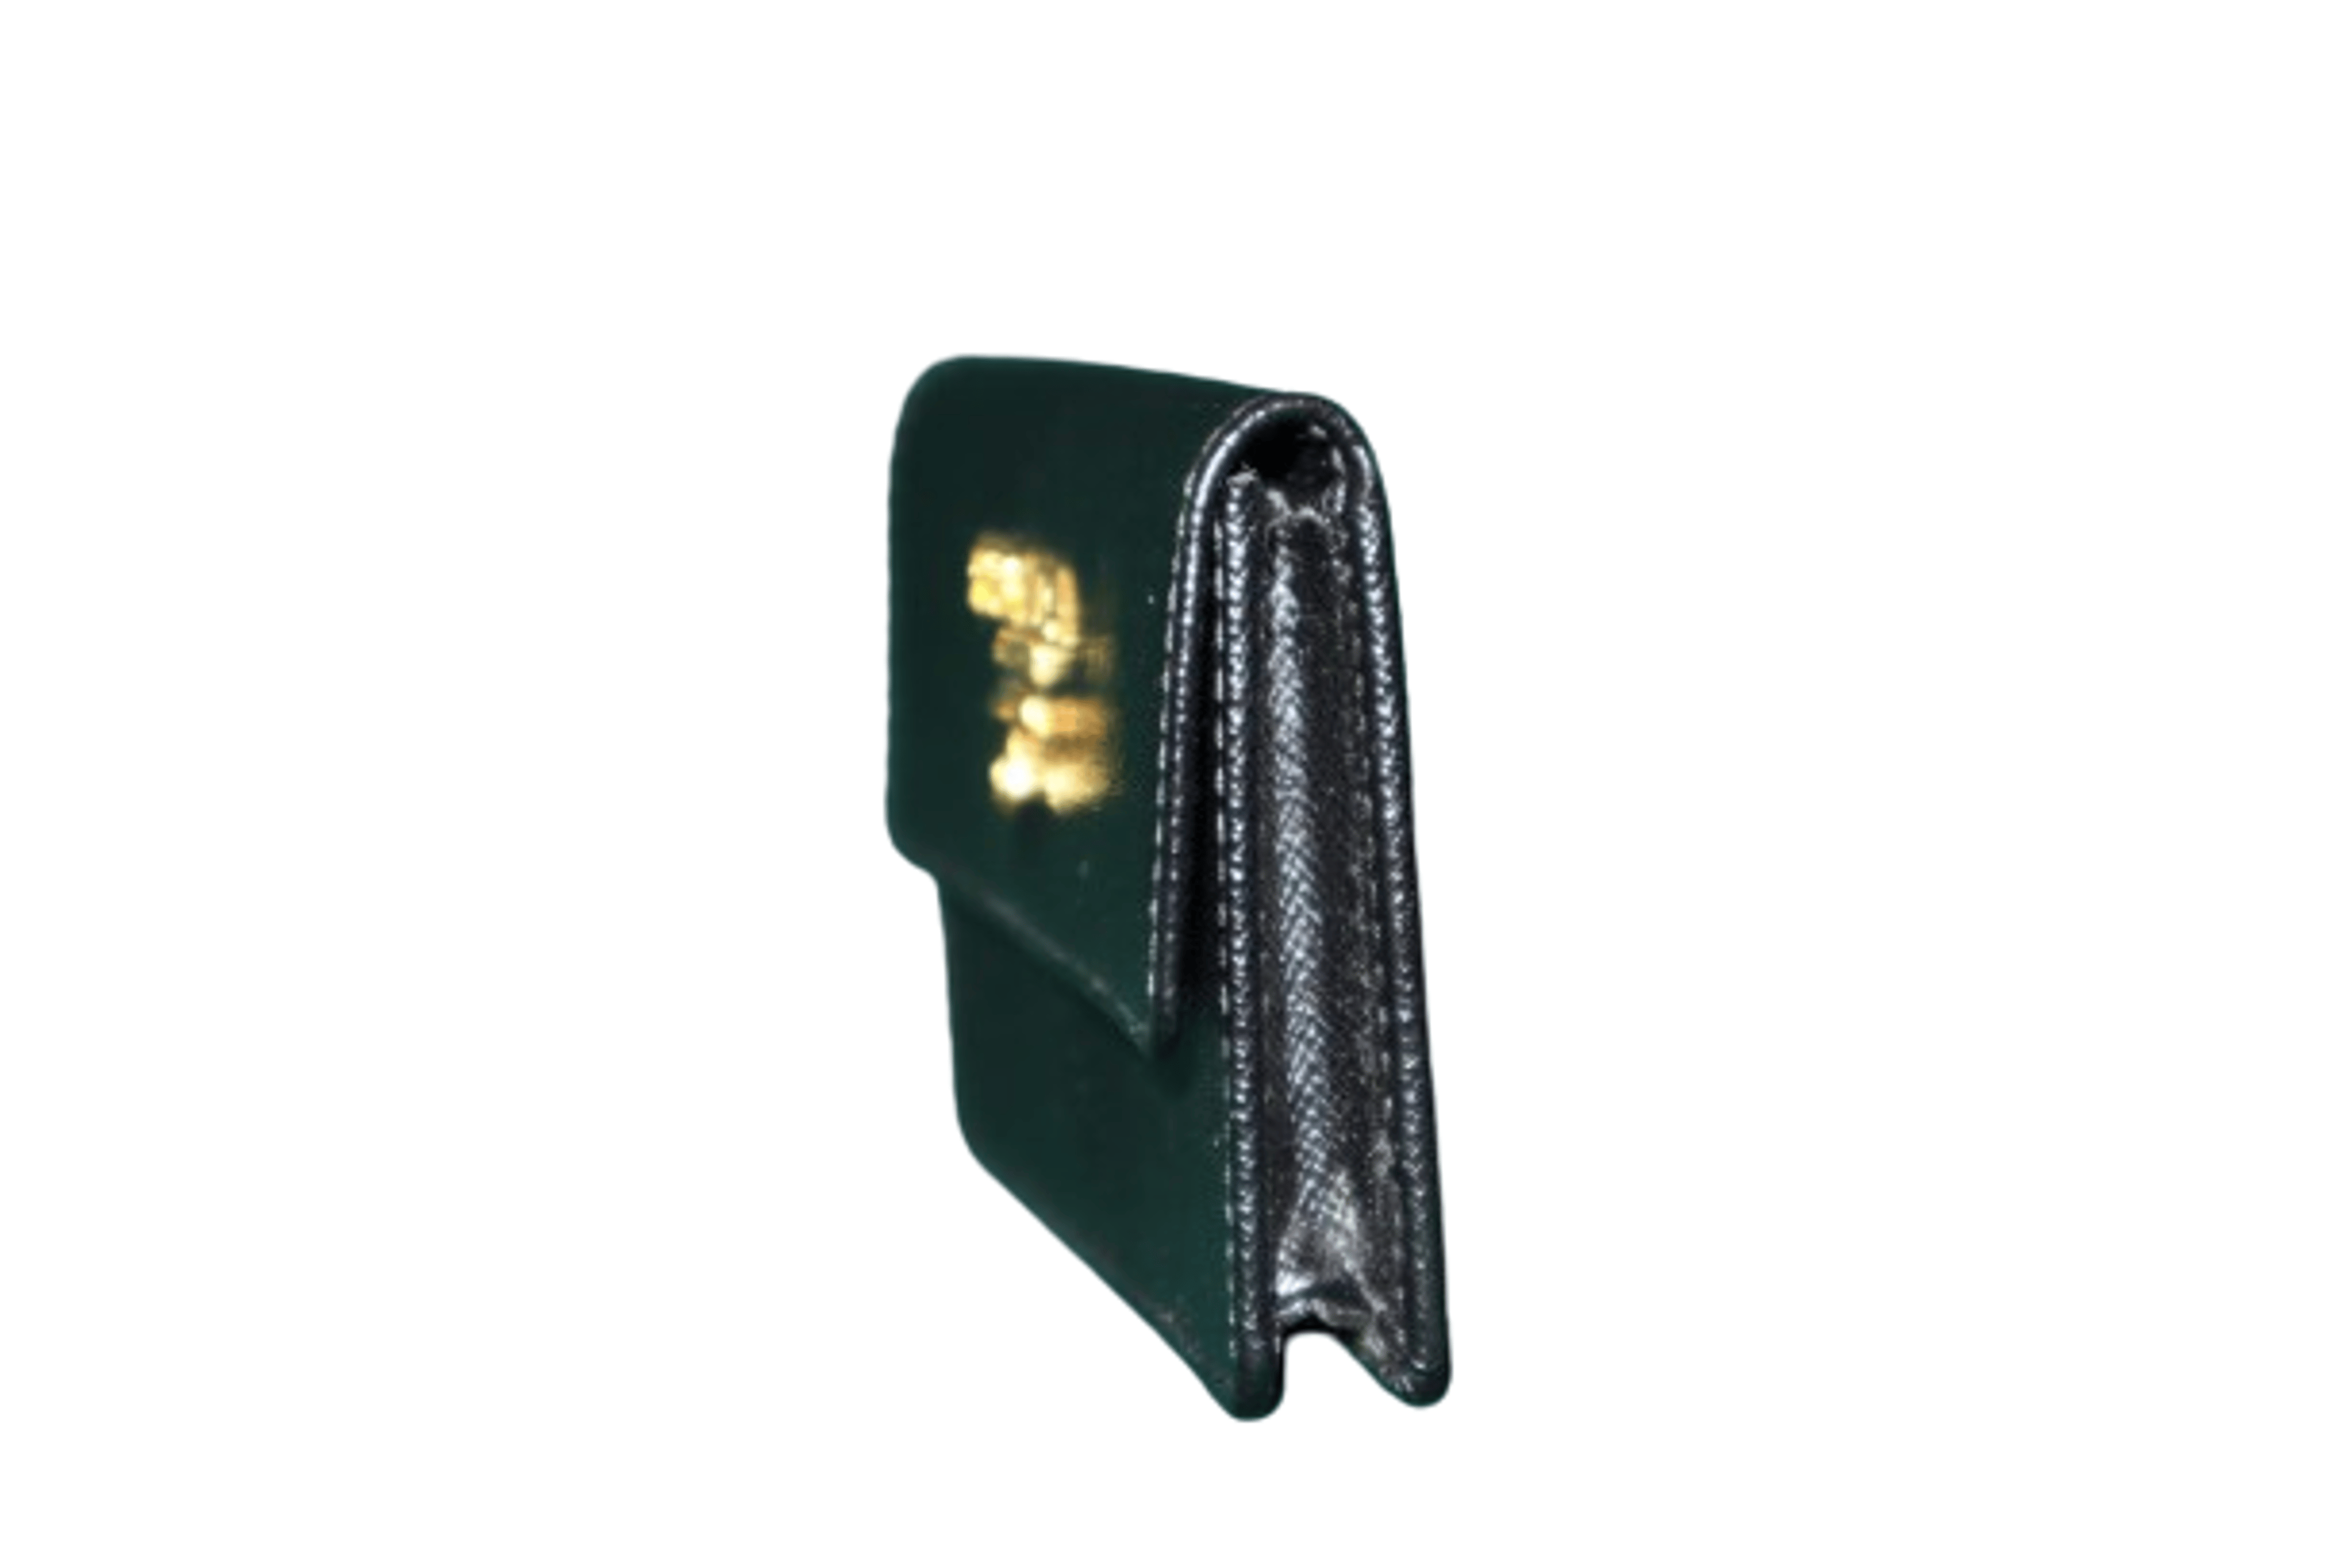 Alternate View 4 of Prada Black Saffiano Leather Flap Card Holder NEW